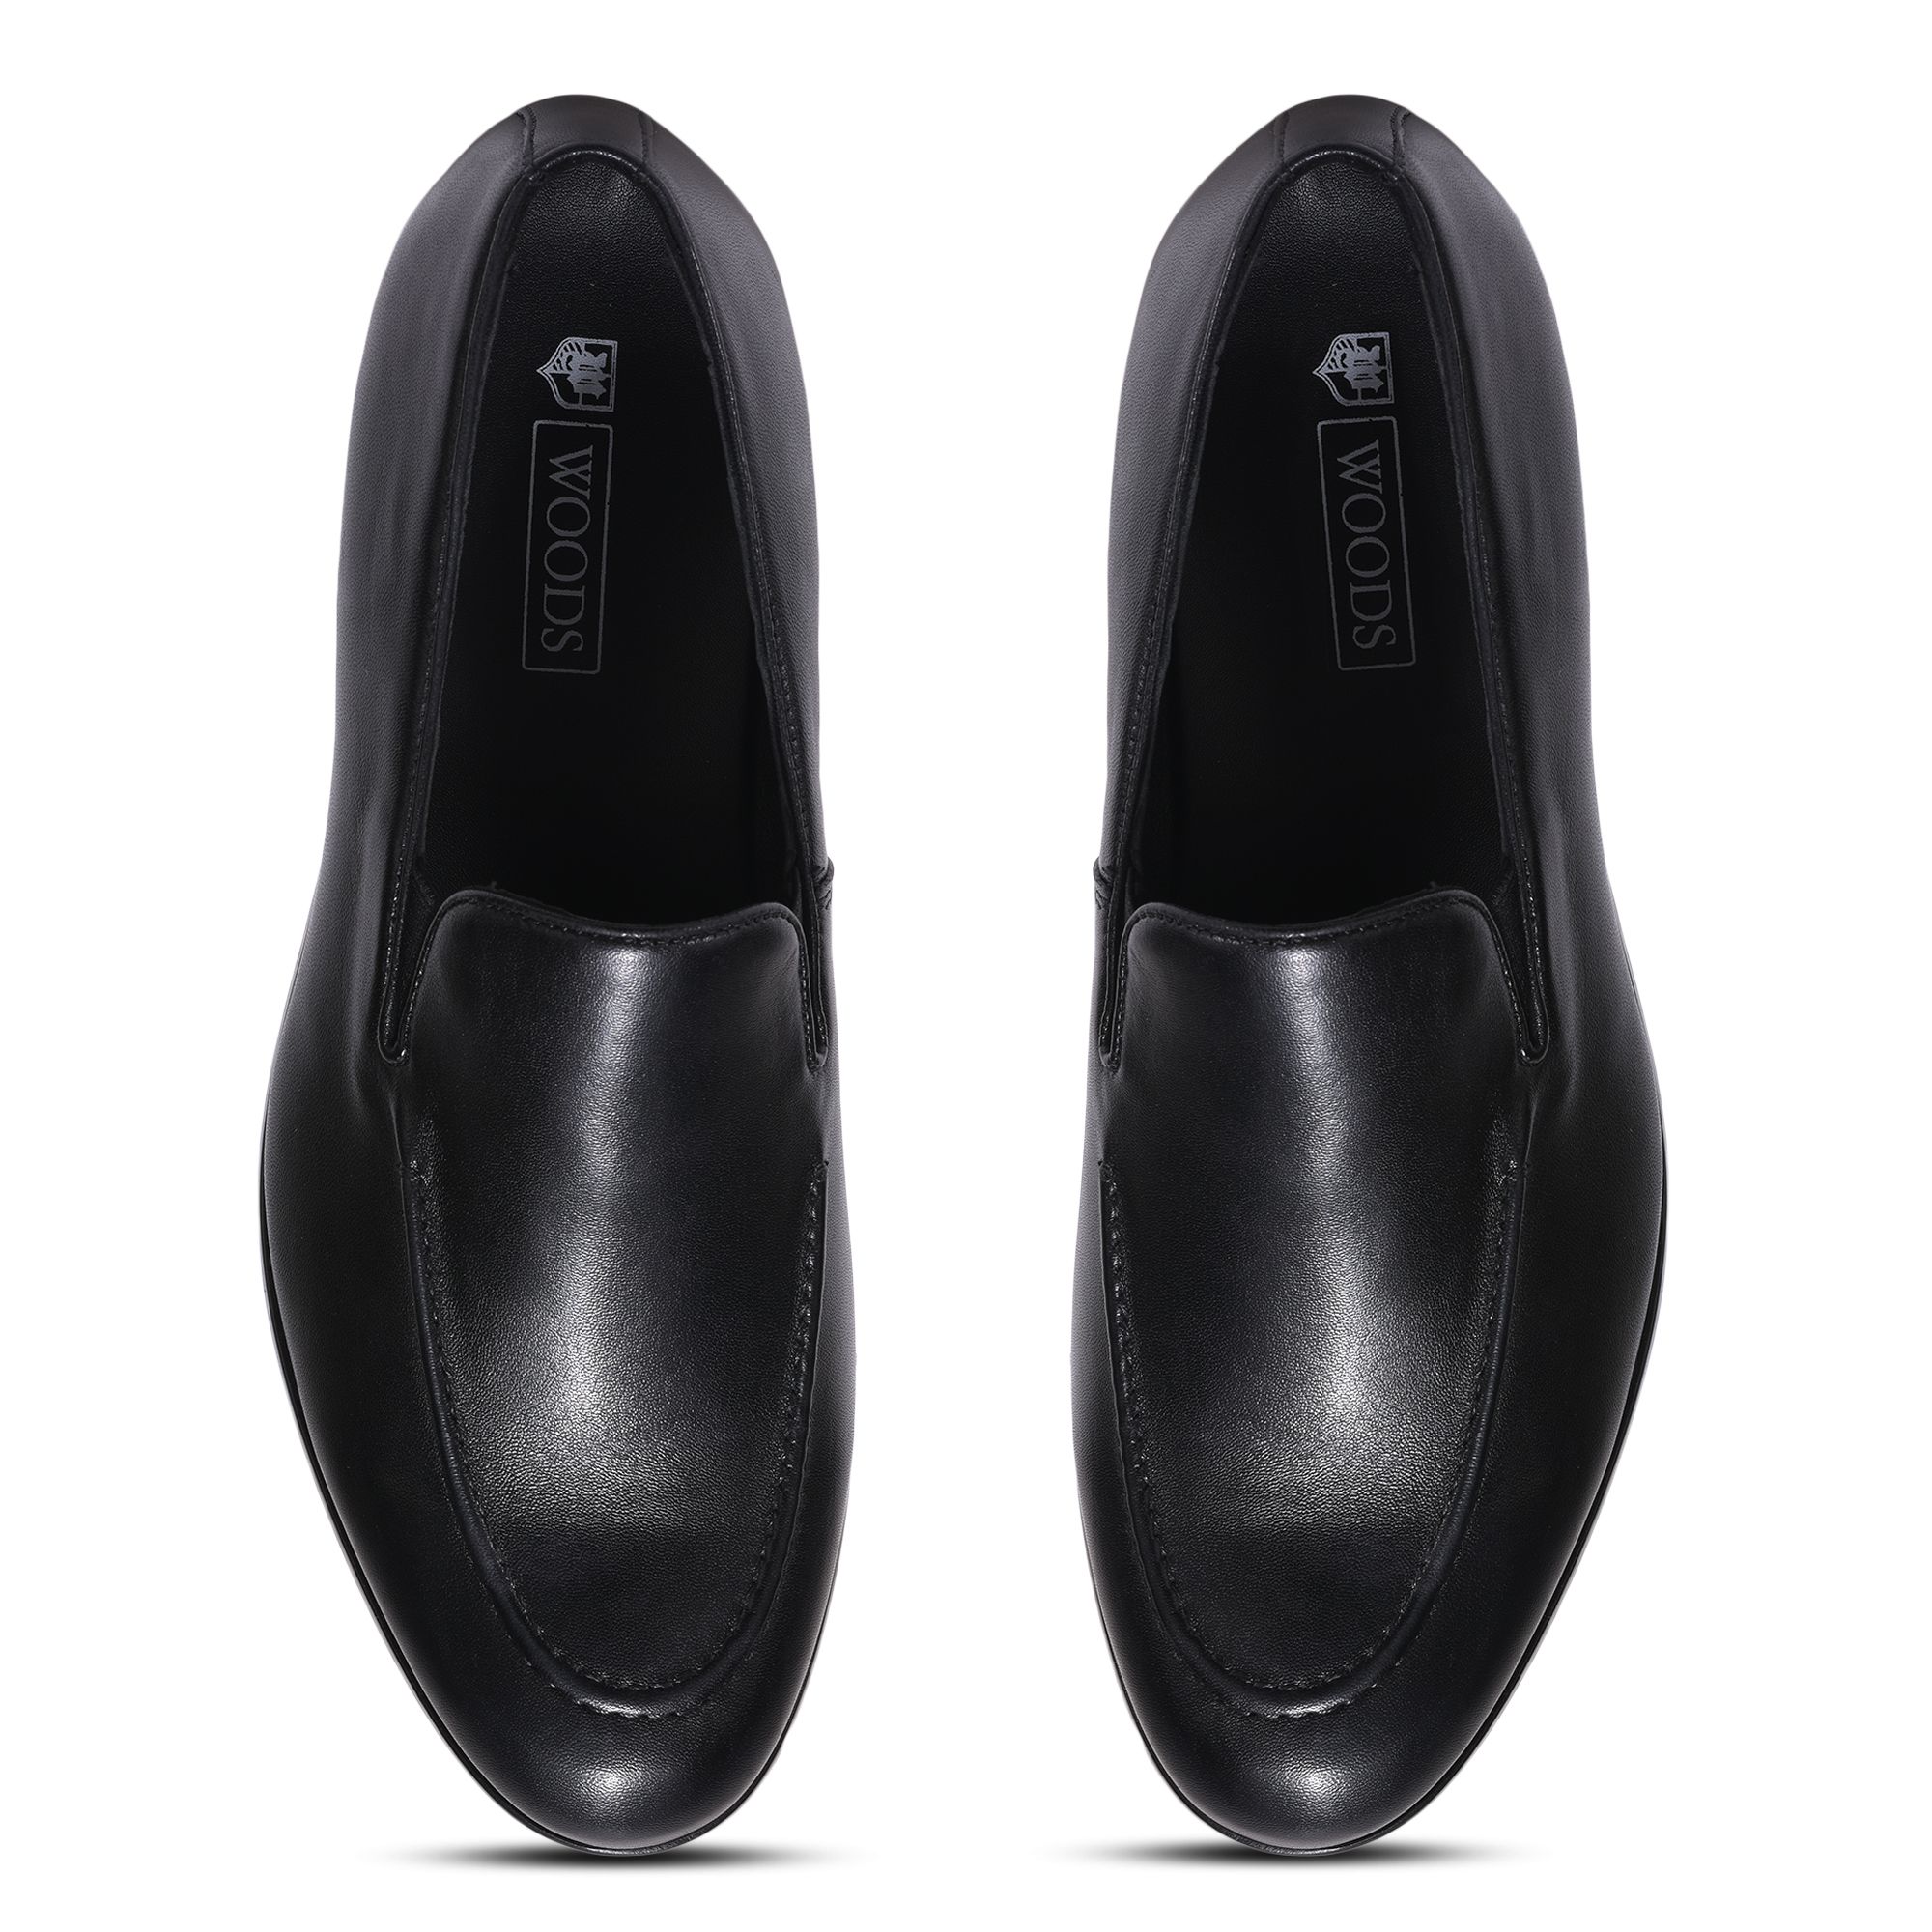 Black formal slip-on shoes for men